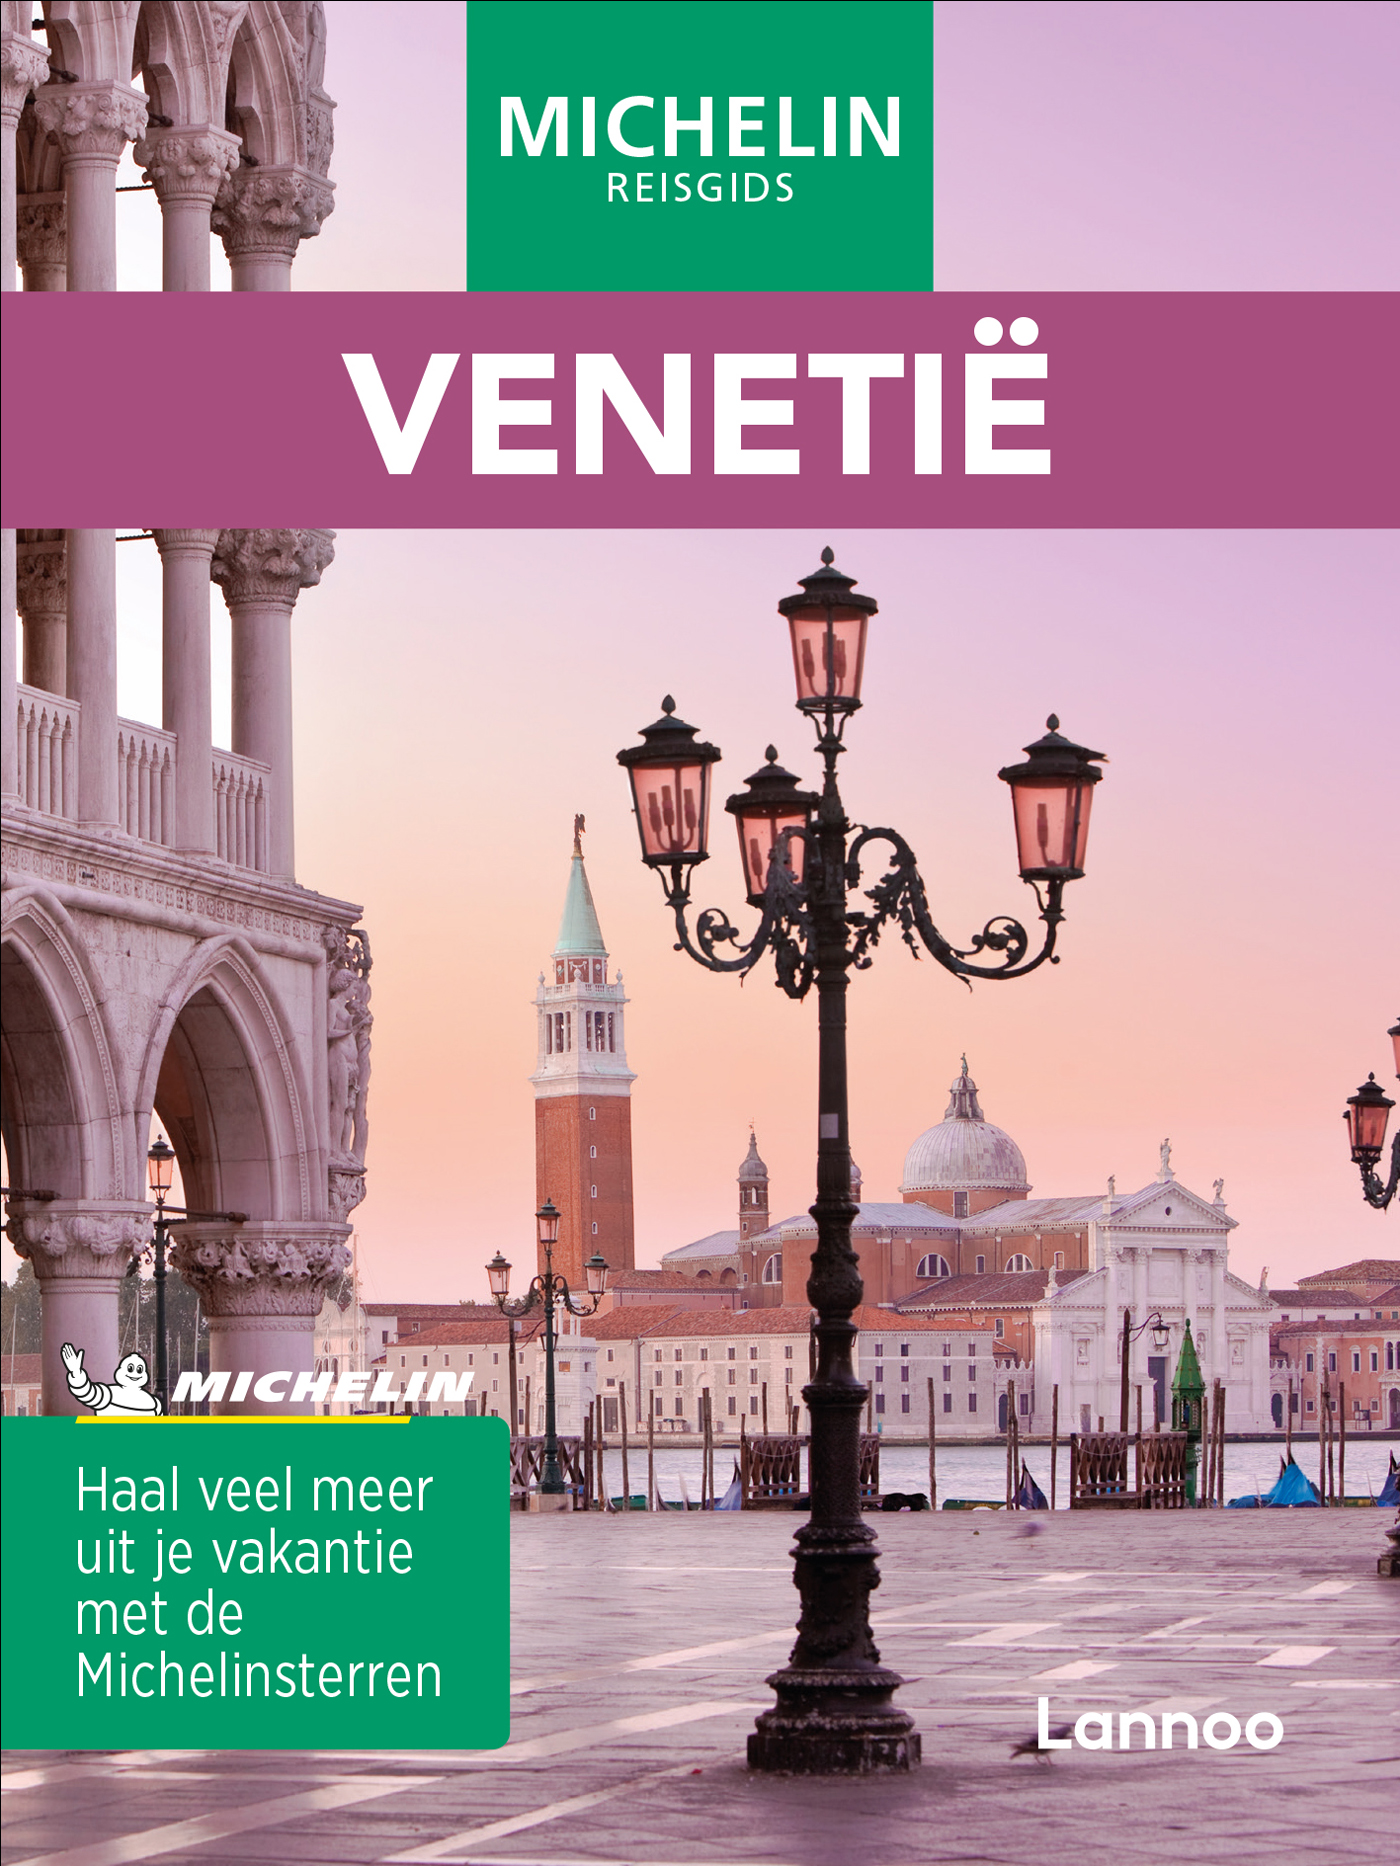 Online bestellen: Reisgids Michelin groene gids Venetië | Lannoo